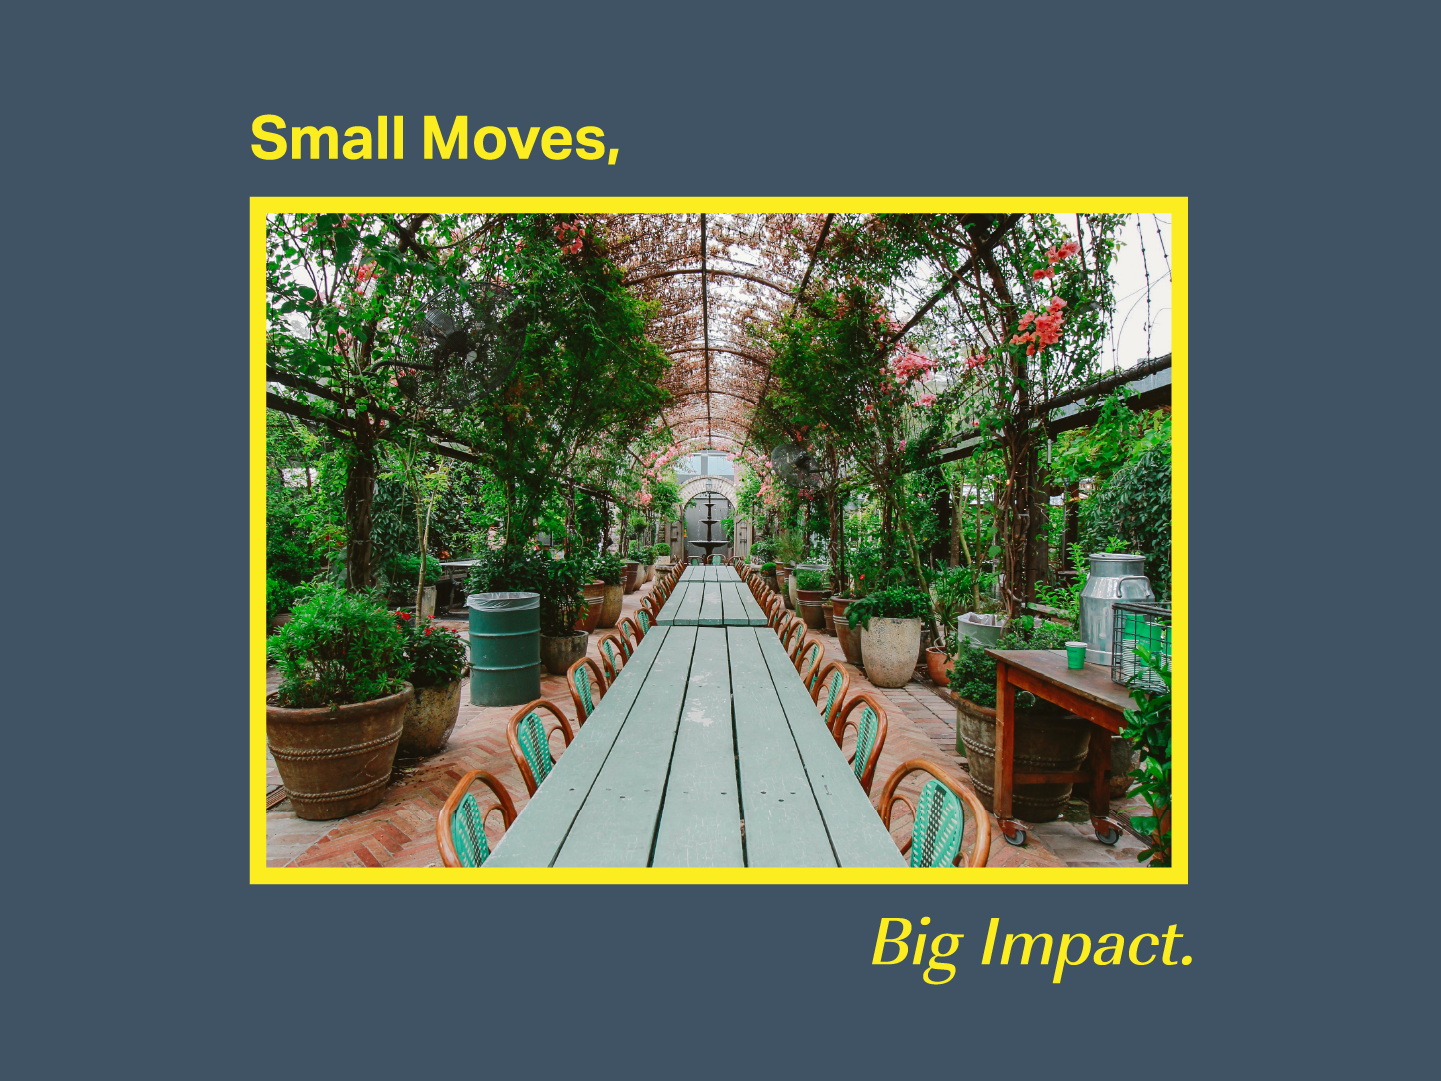 Small Moves, Big Impact